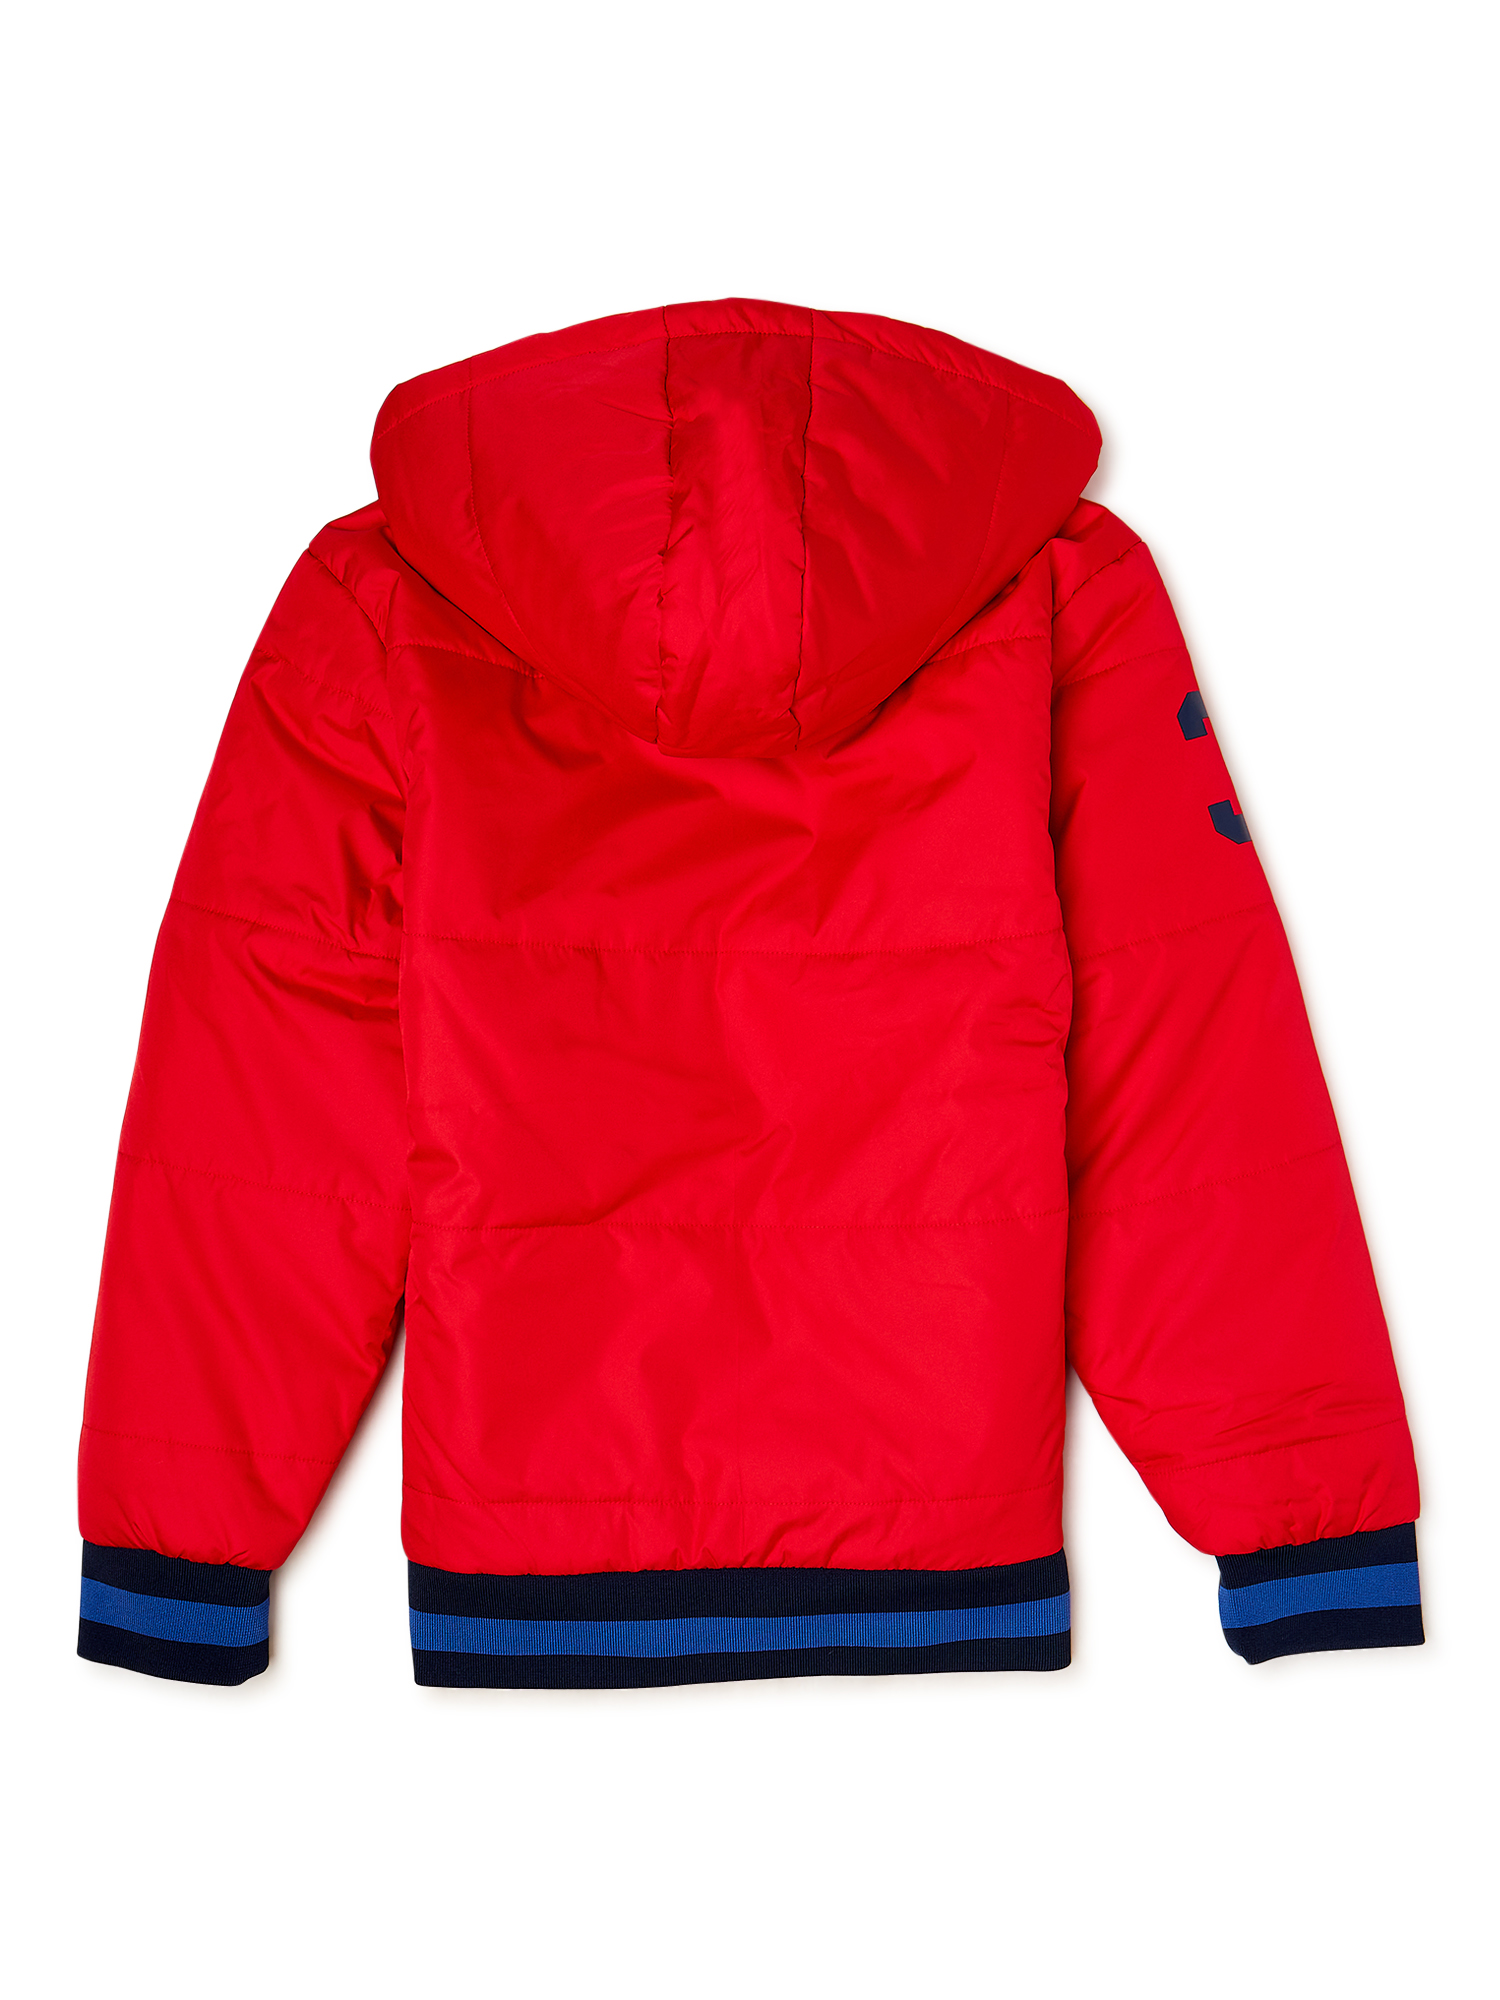 U.S. Polo Assn. Boys Varsity Puffer Jacket, Sizes 8-20 - image 2 of 4